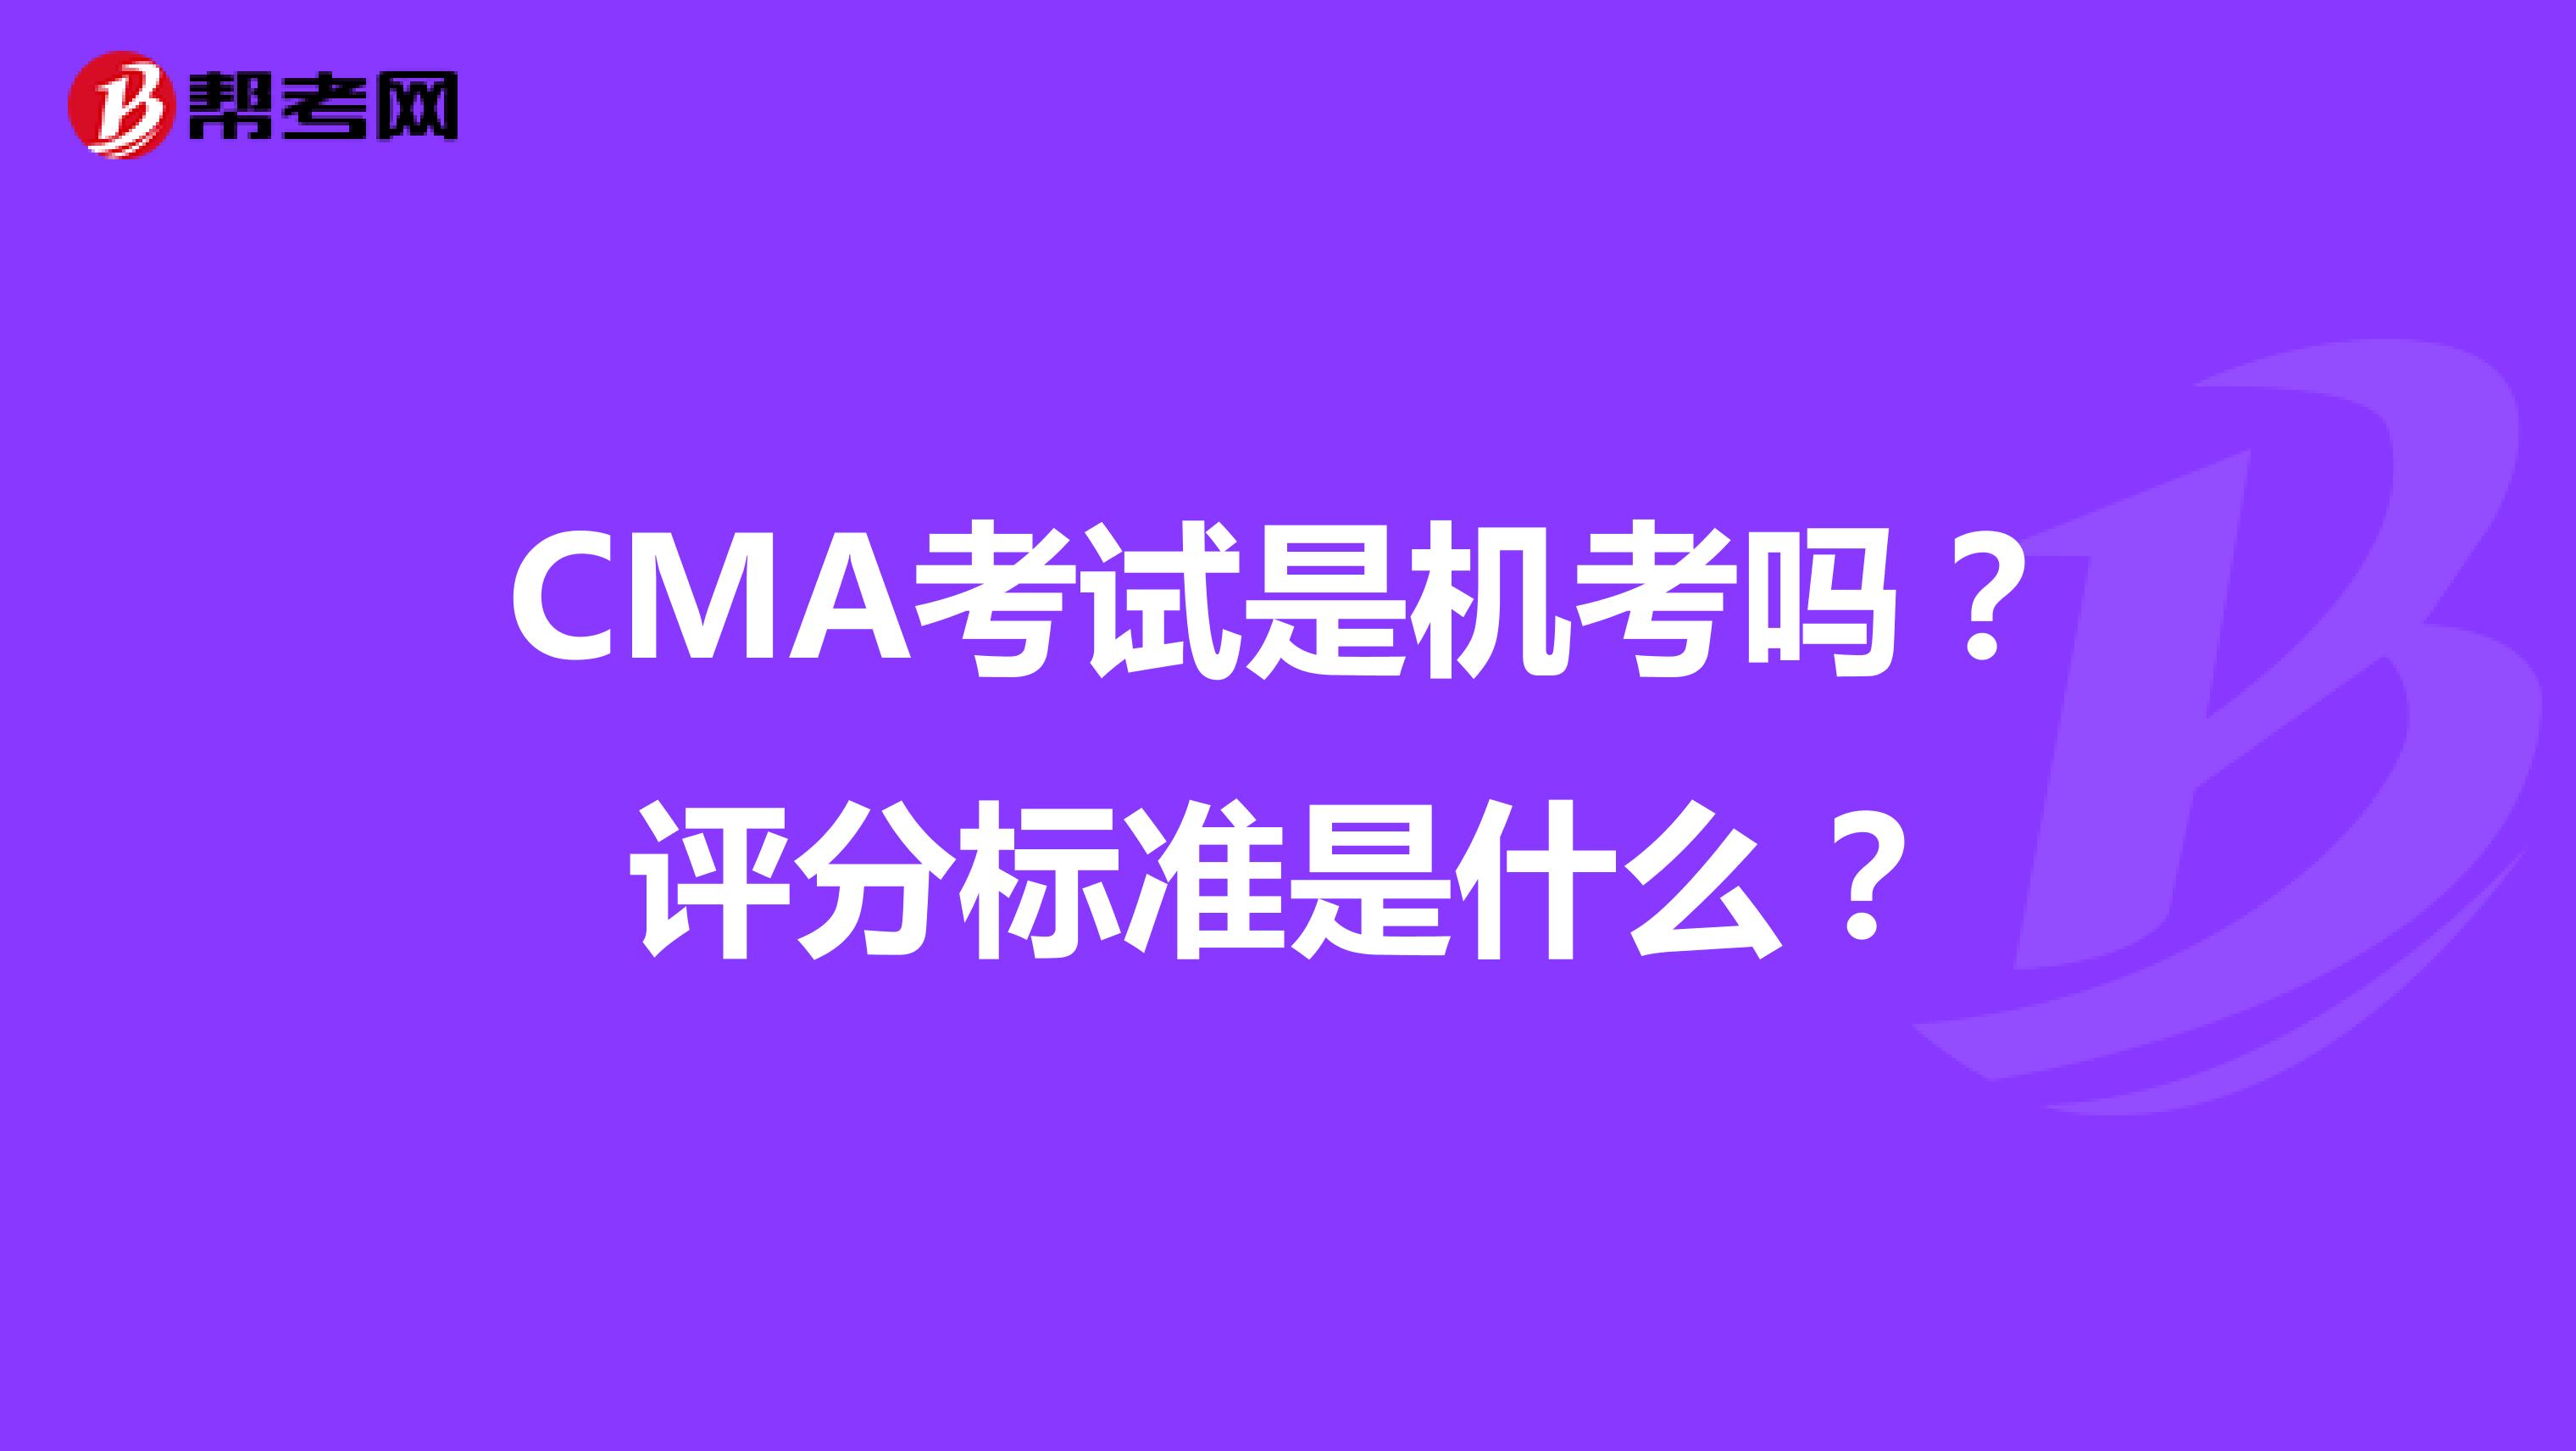 CMA考试是机考吗？评分标准是什么？